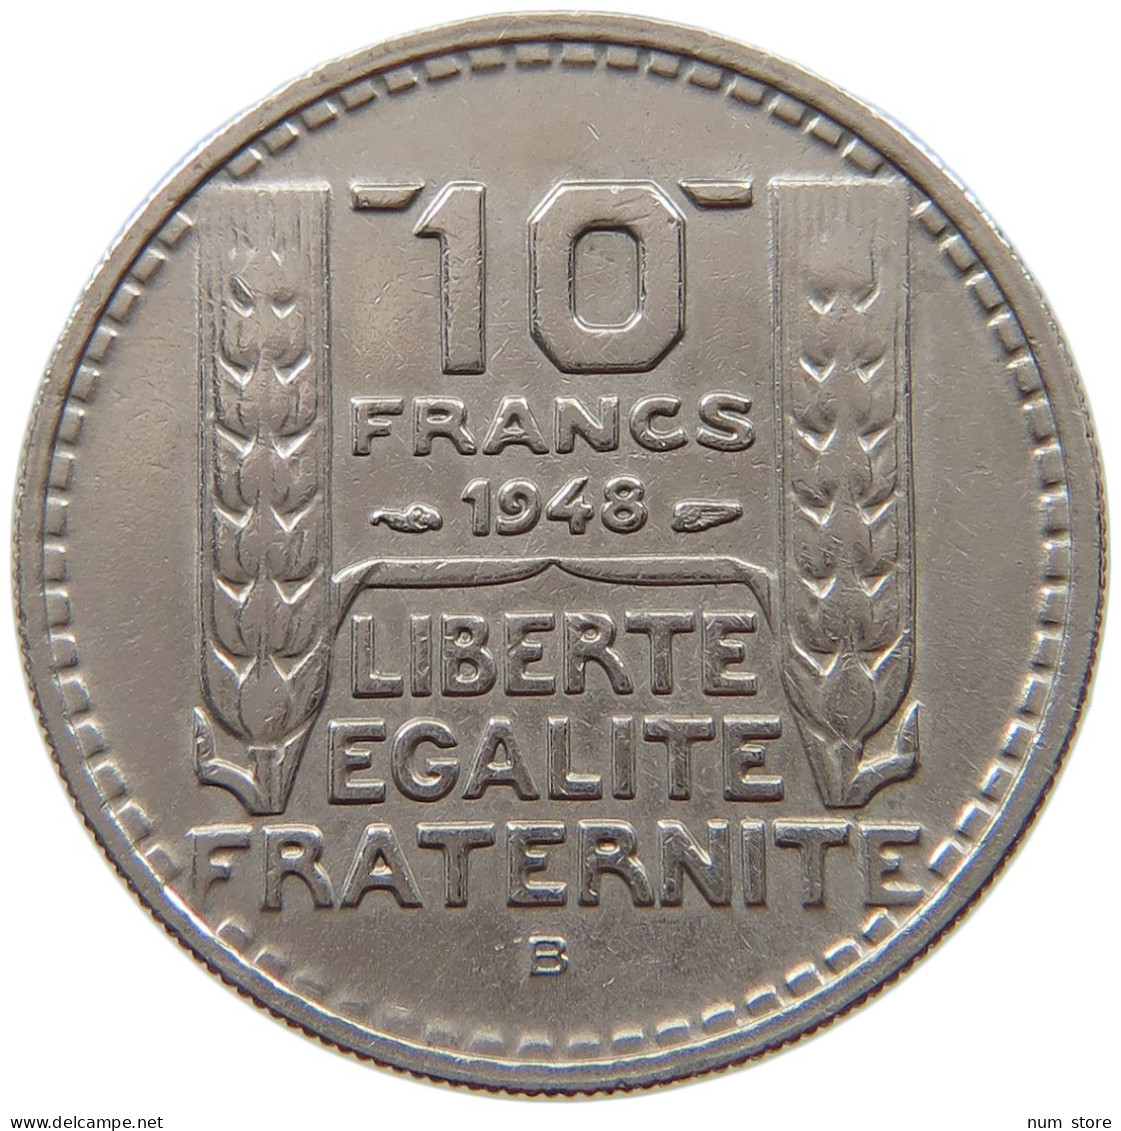 FRANCE 10 FRANCS 1948 B #a014 0853 - 10 Francs